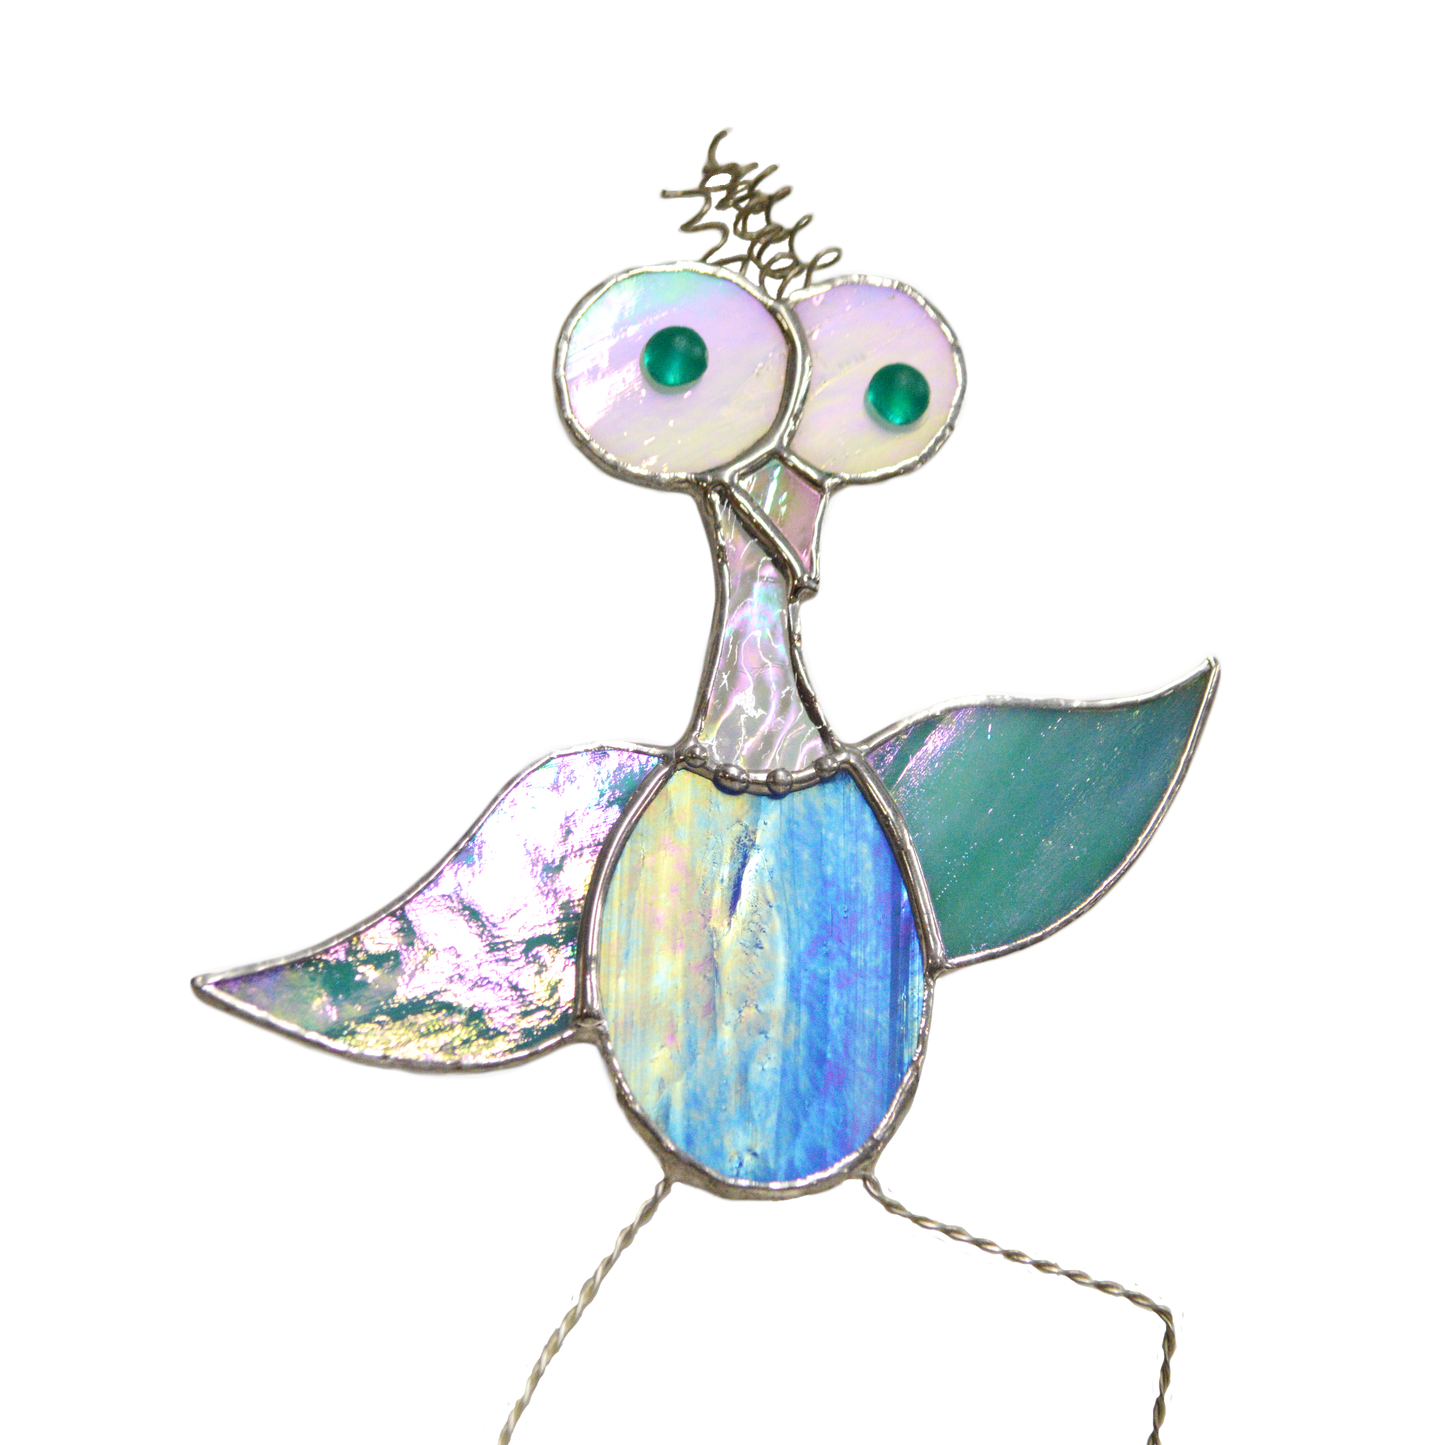 Stained Glass Cartoon Bird Suncatcher